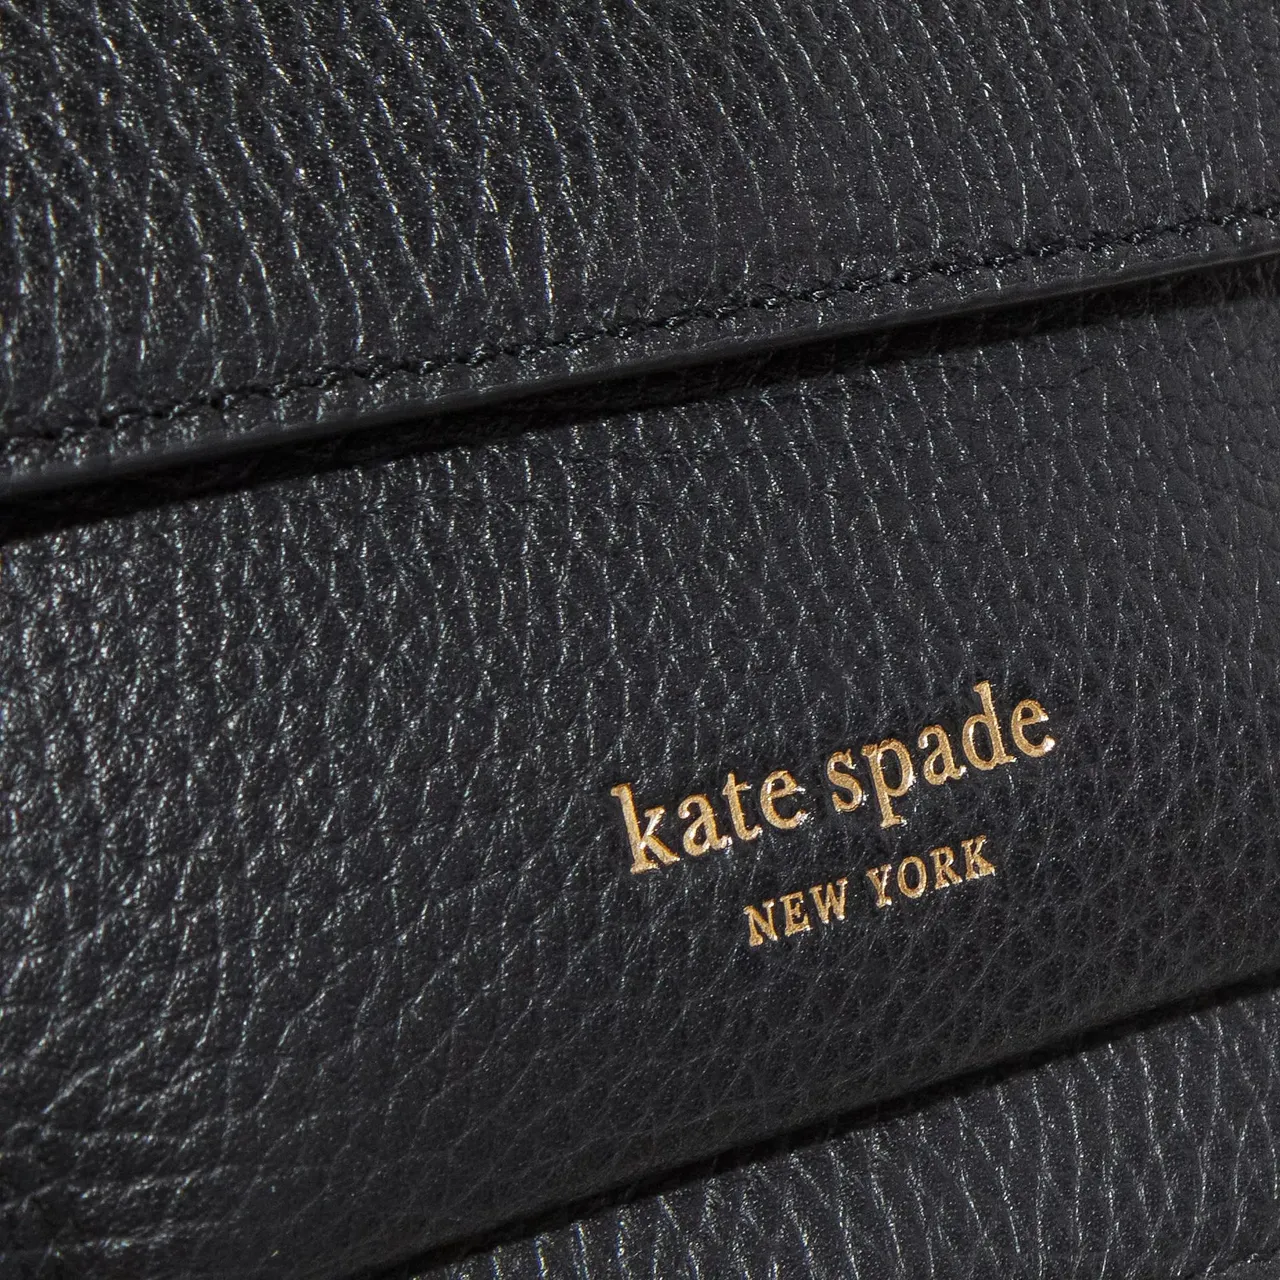 Kate Spade New York Crossbody Bags - Ava Pebbled Leather Crossbody - black - Crossbody Bags for ladies